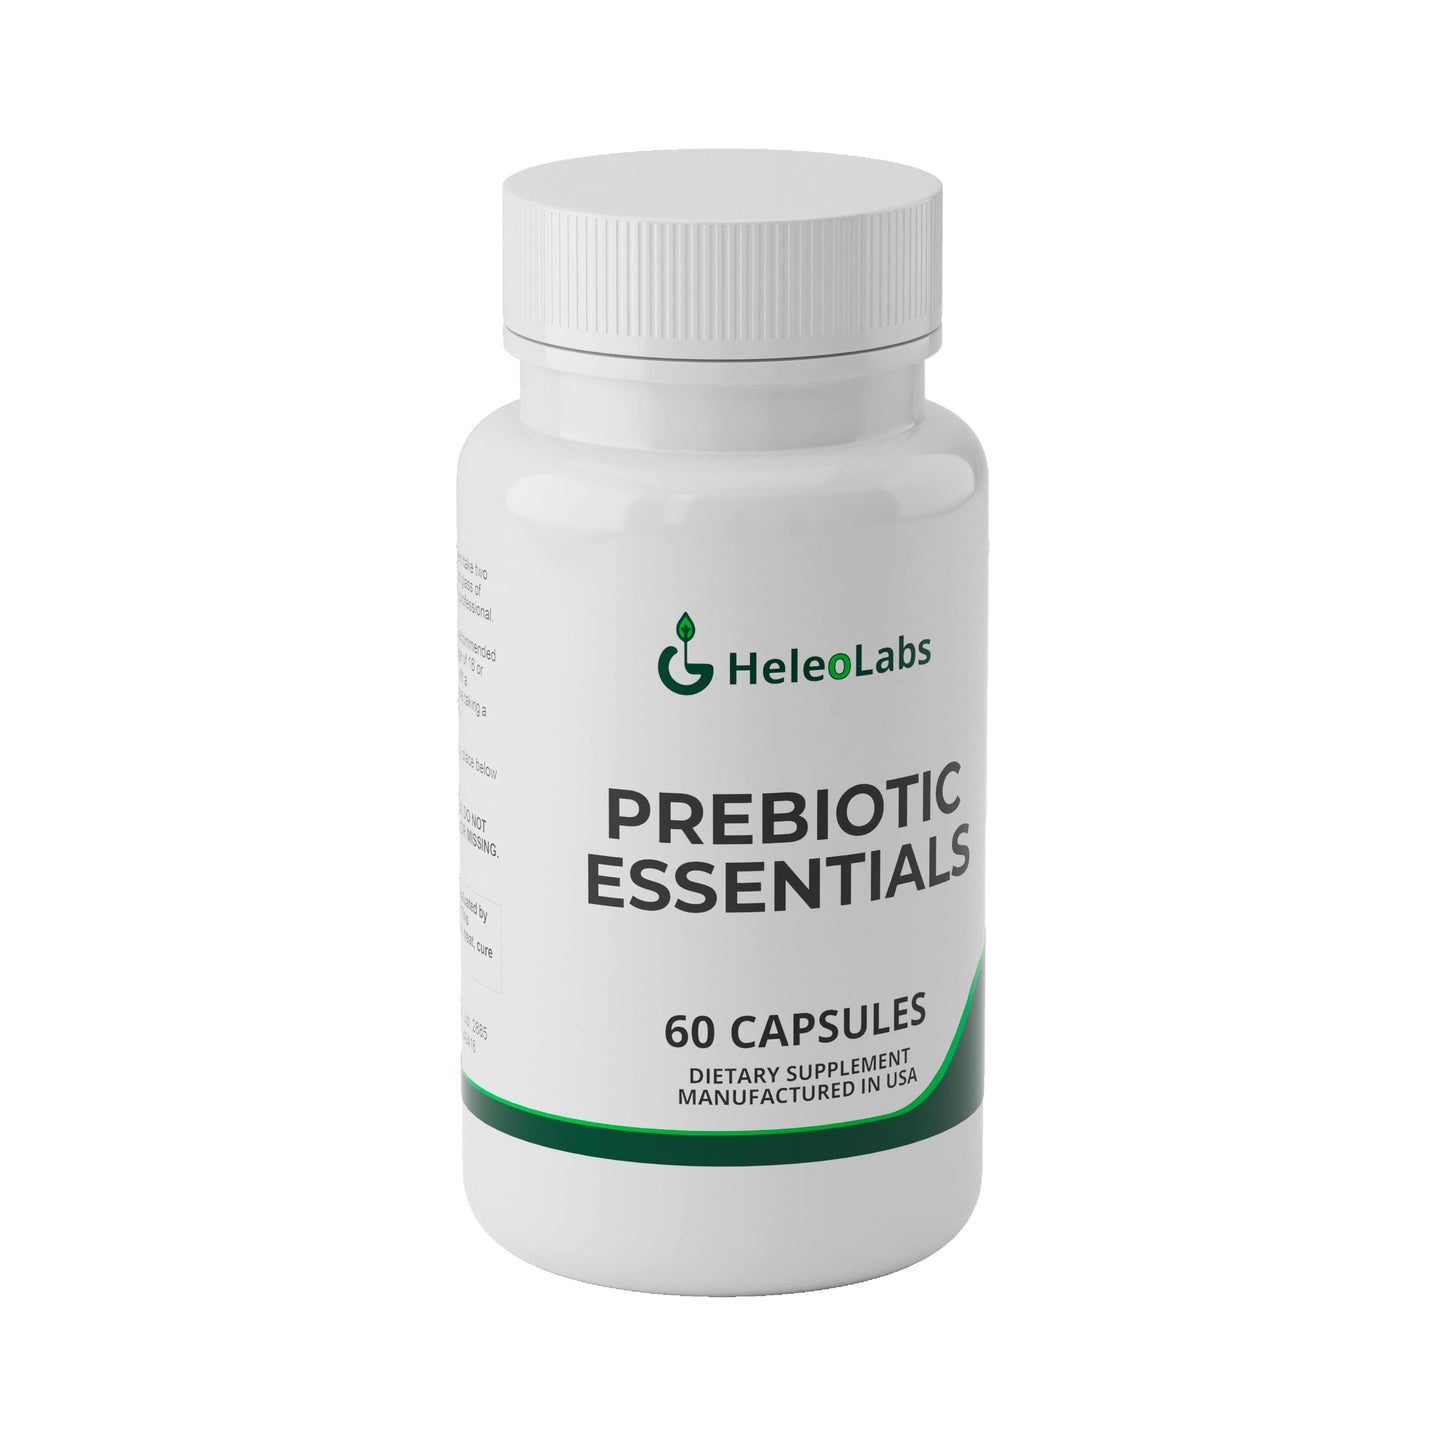 Image of Heleolabs Prebiotic Essentials.